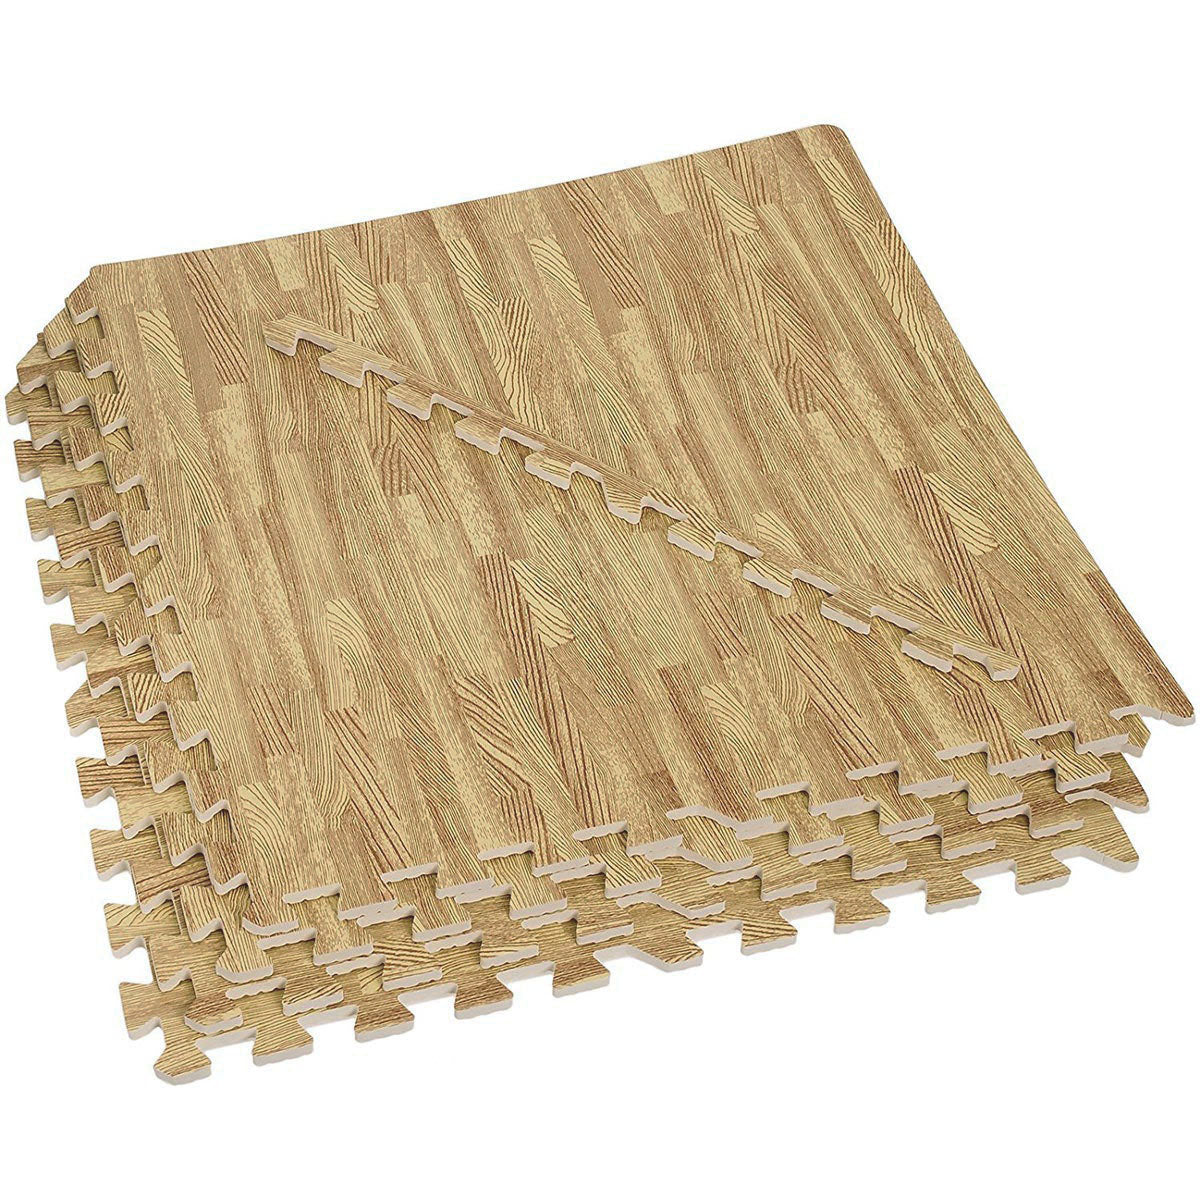 Light Oak Wood Grain Interlocking EVA Foam Floor Mats (100 Sq. Ft